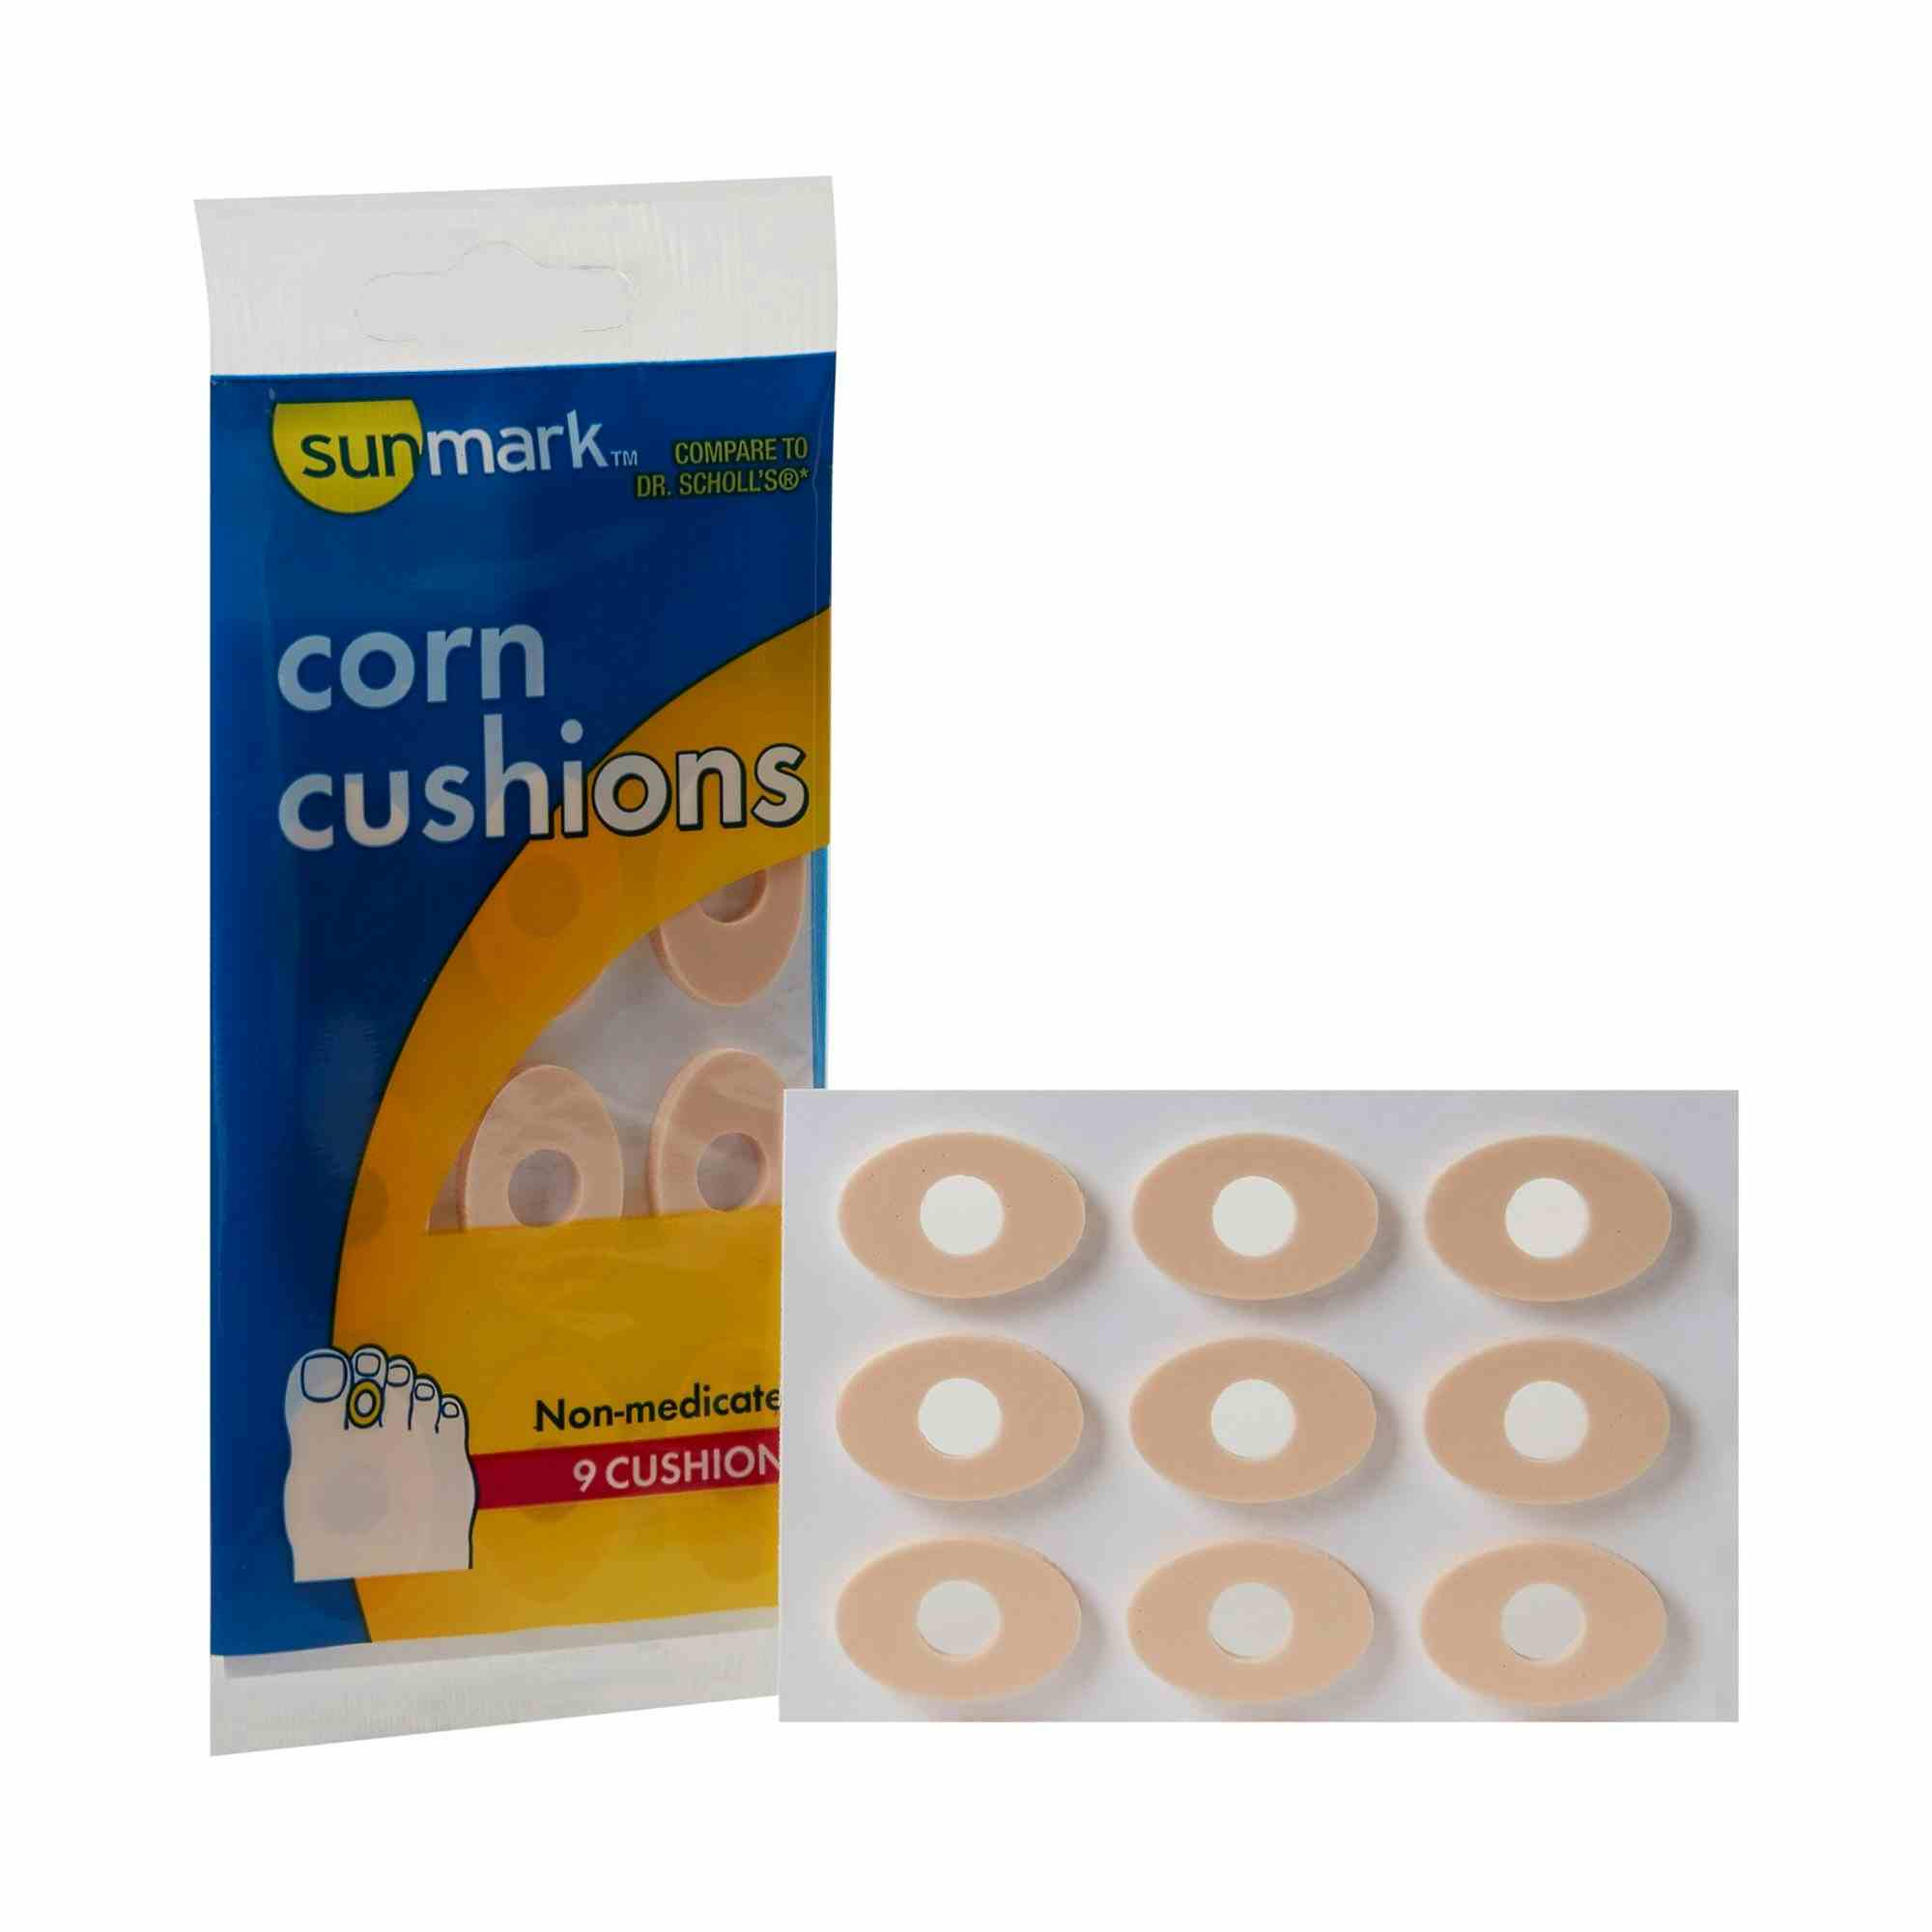 sunmark Corn Cushions, 01093903533, Pack of 9